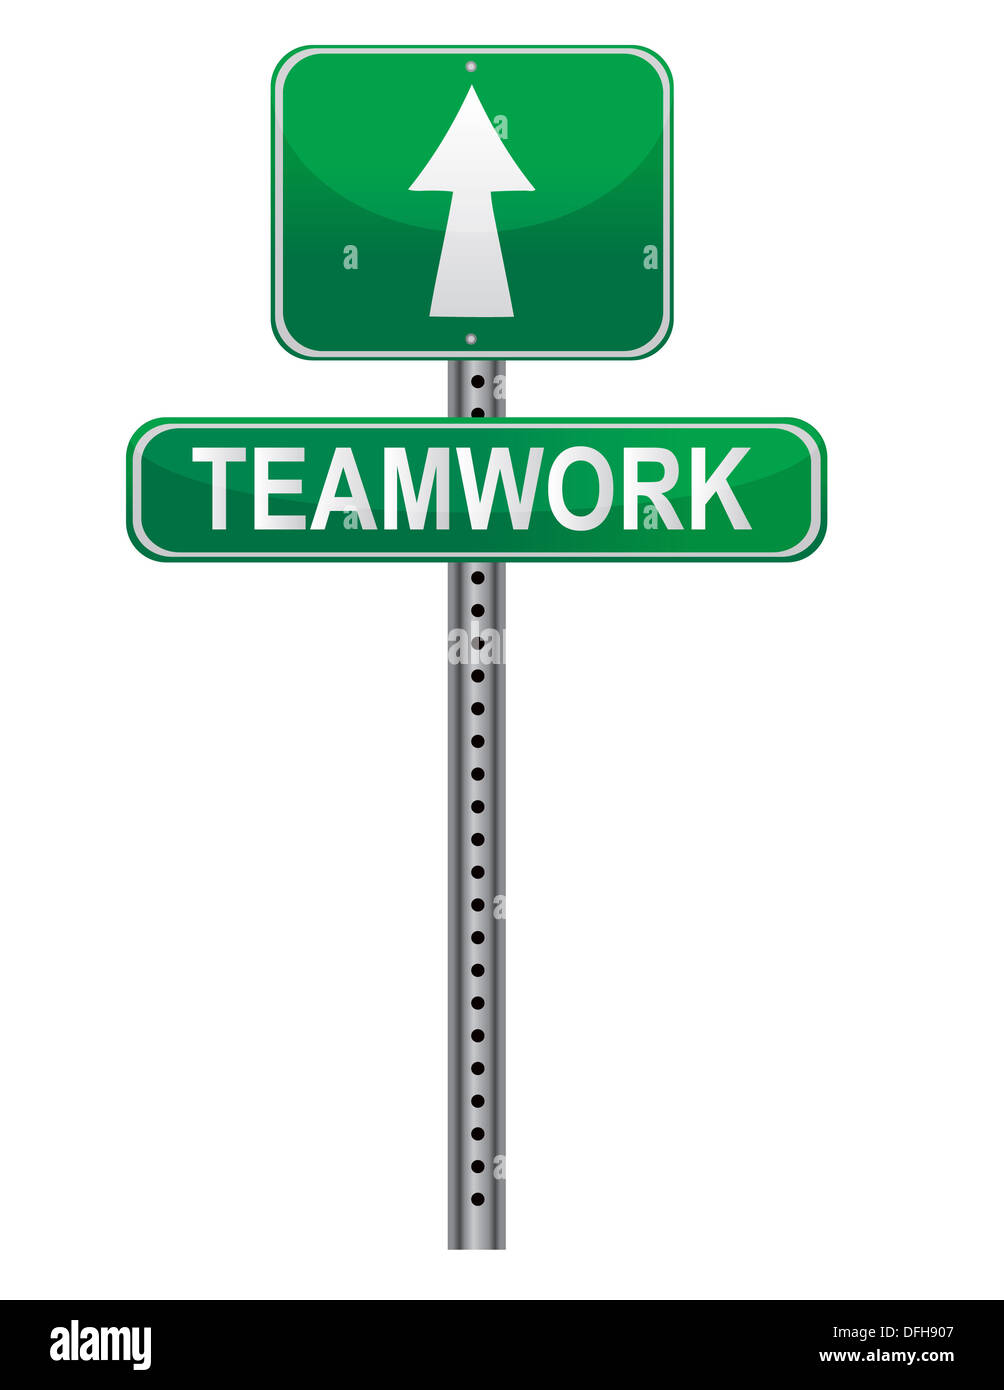 A street sign with a Teamwork theme. 